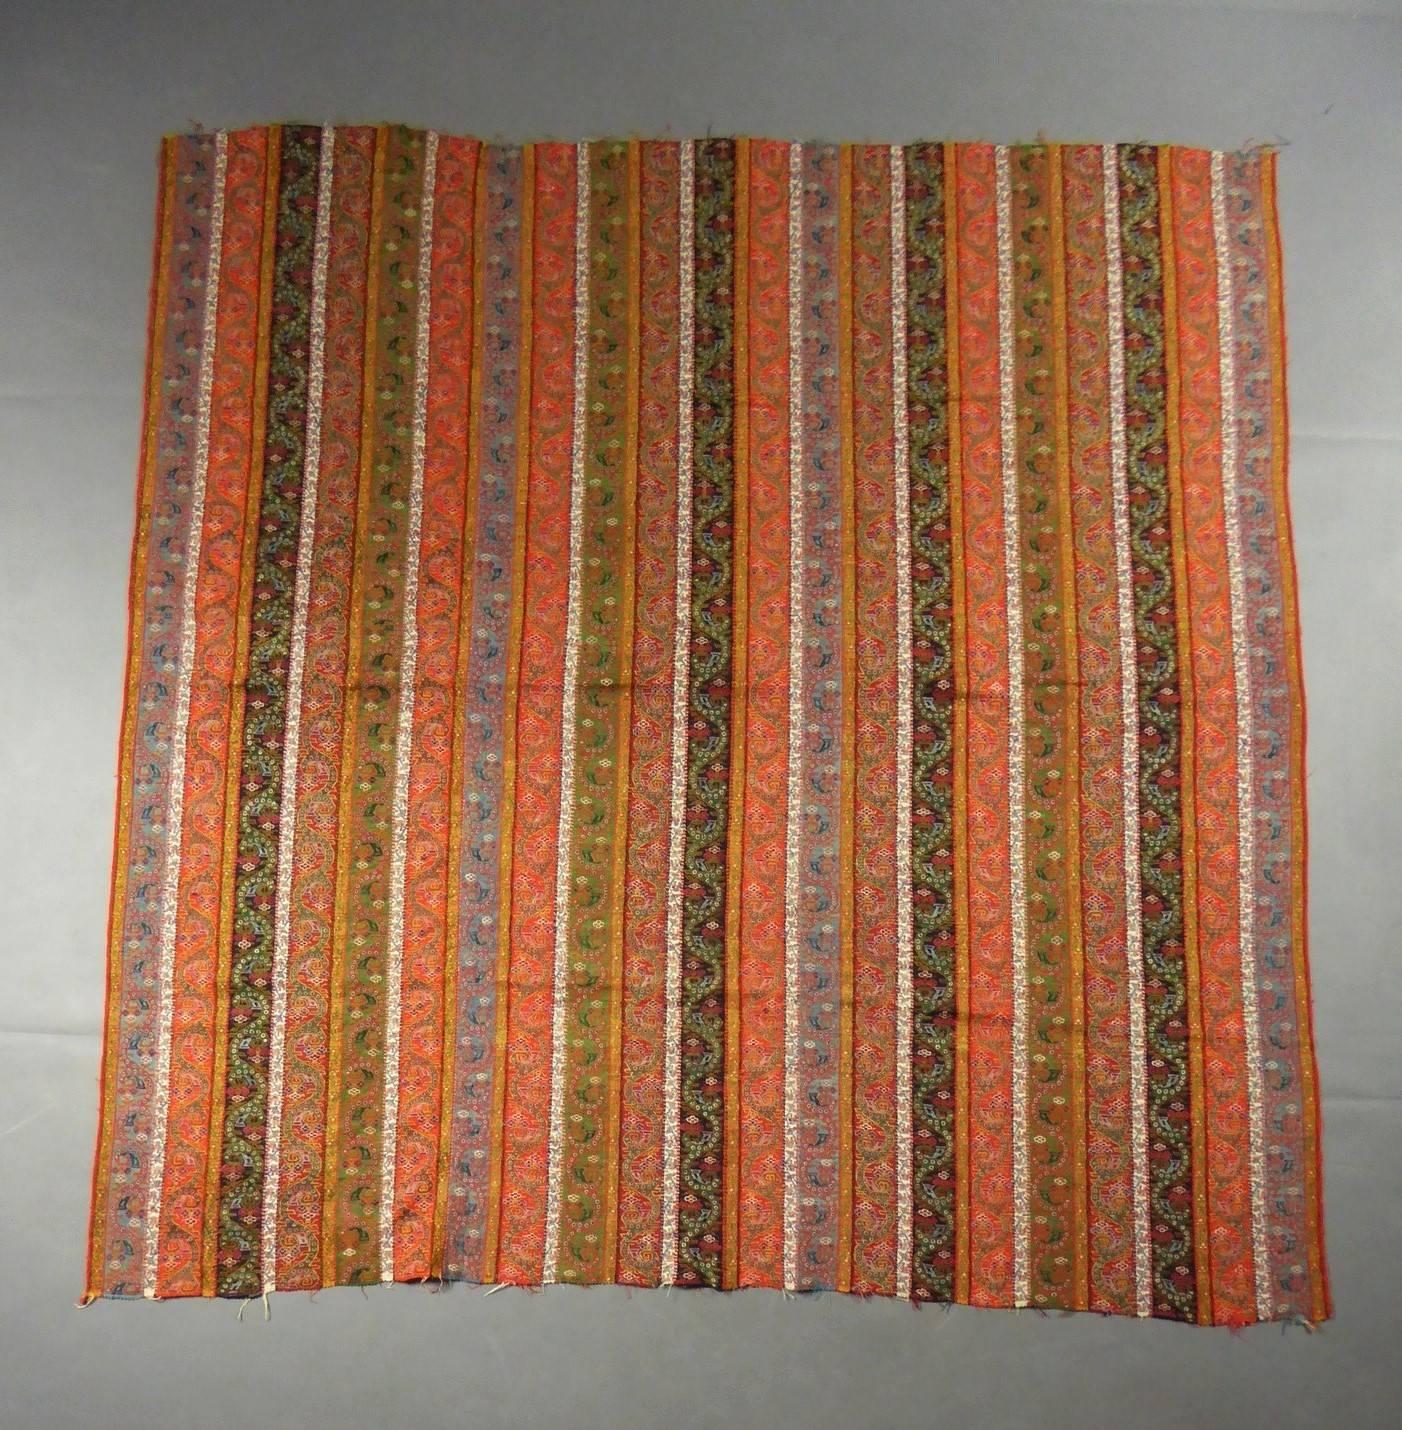 Brown Twill weave striped kashmir shawl  - India or Persia 19th century